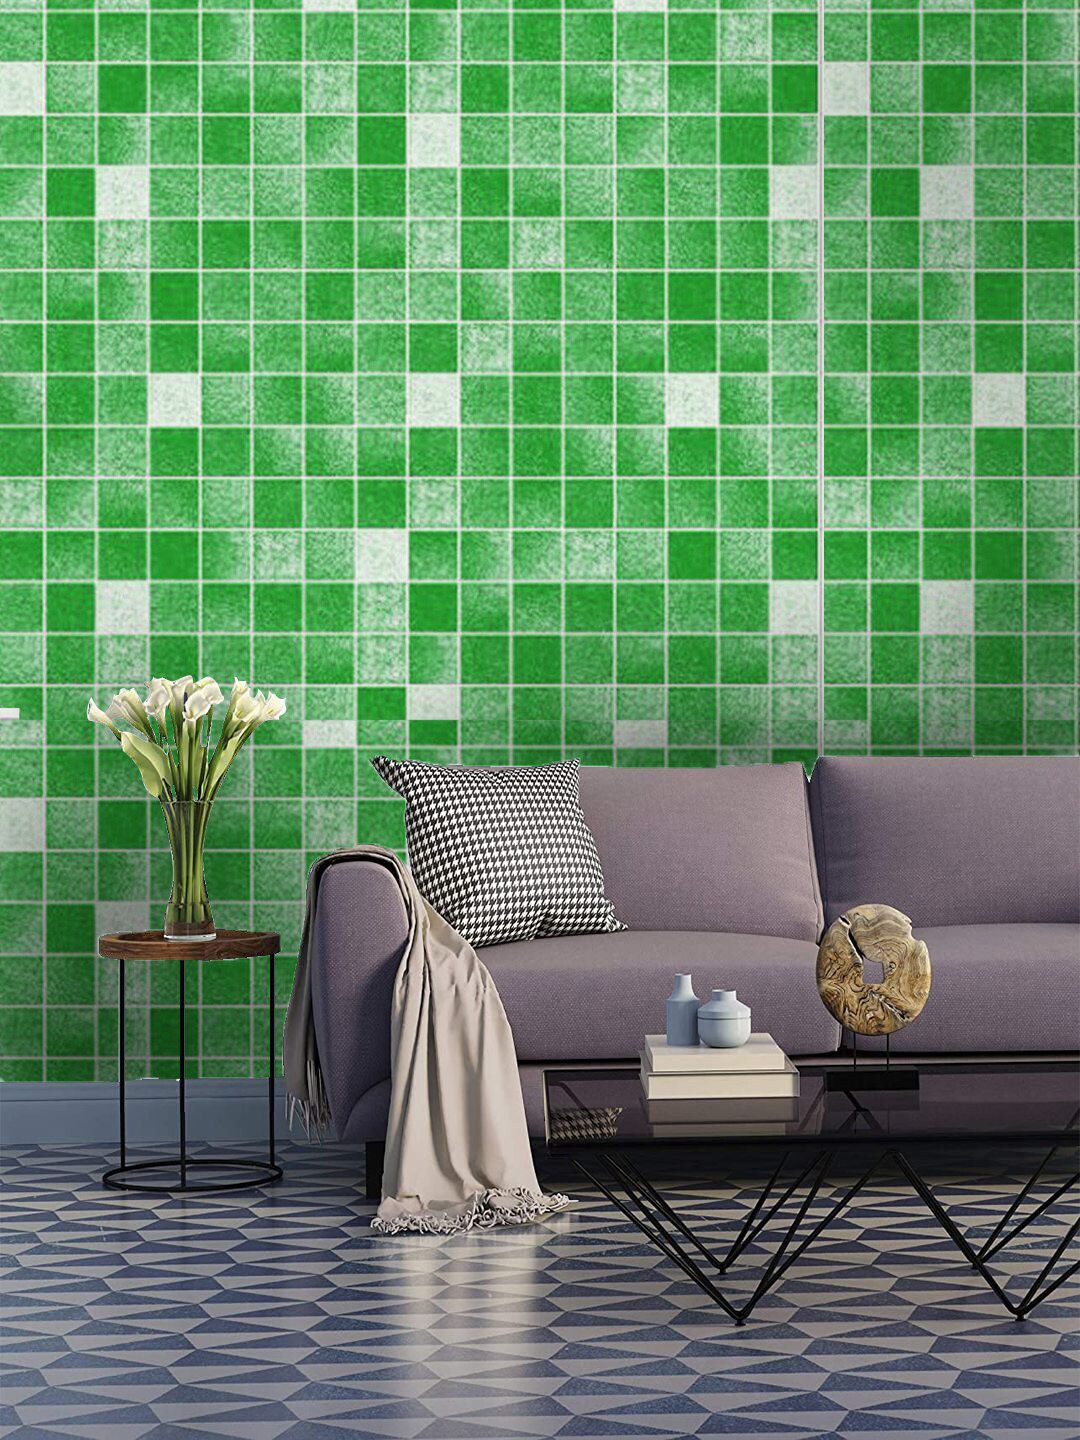 Jaamso Royals Green Self-Adhesive & Waterproof Tiles Wallpaper Price in India